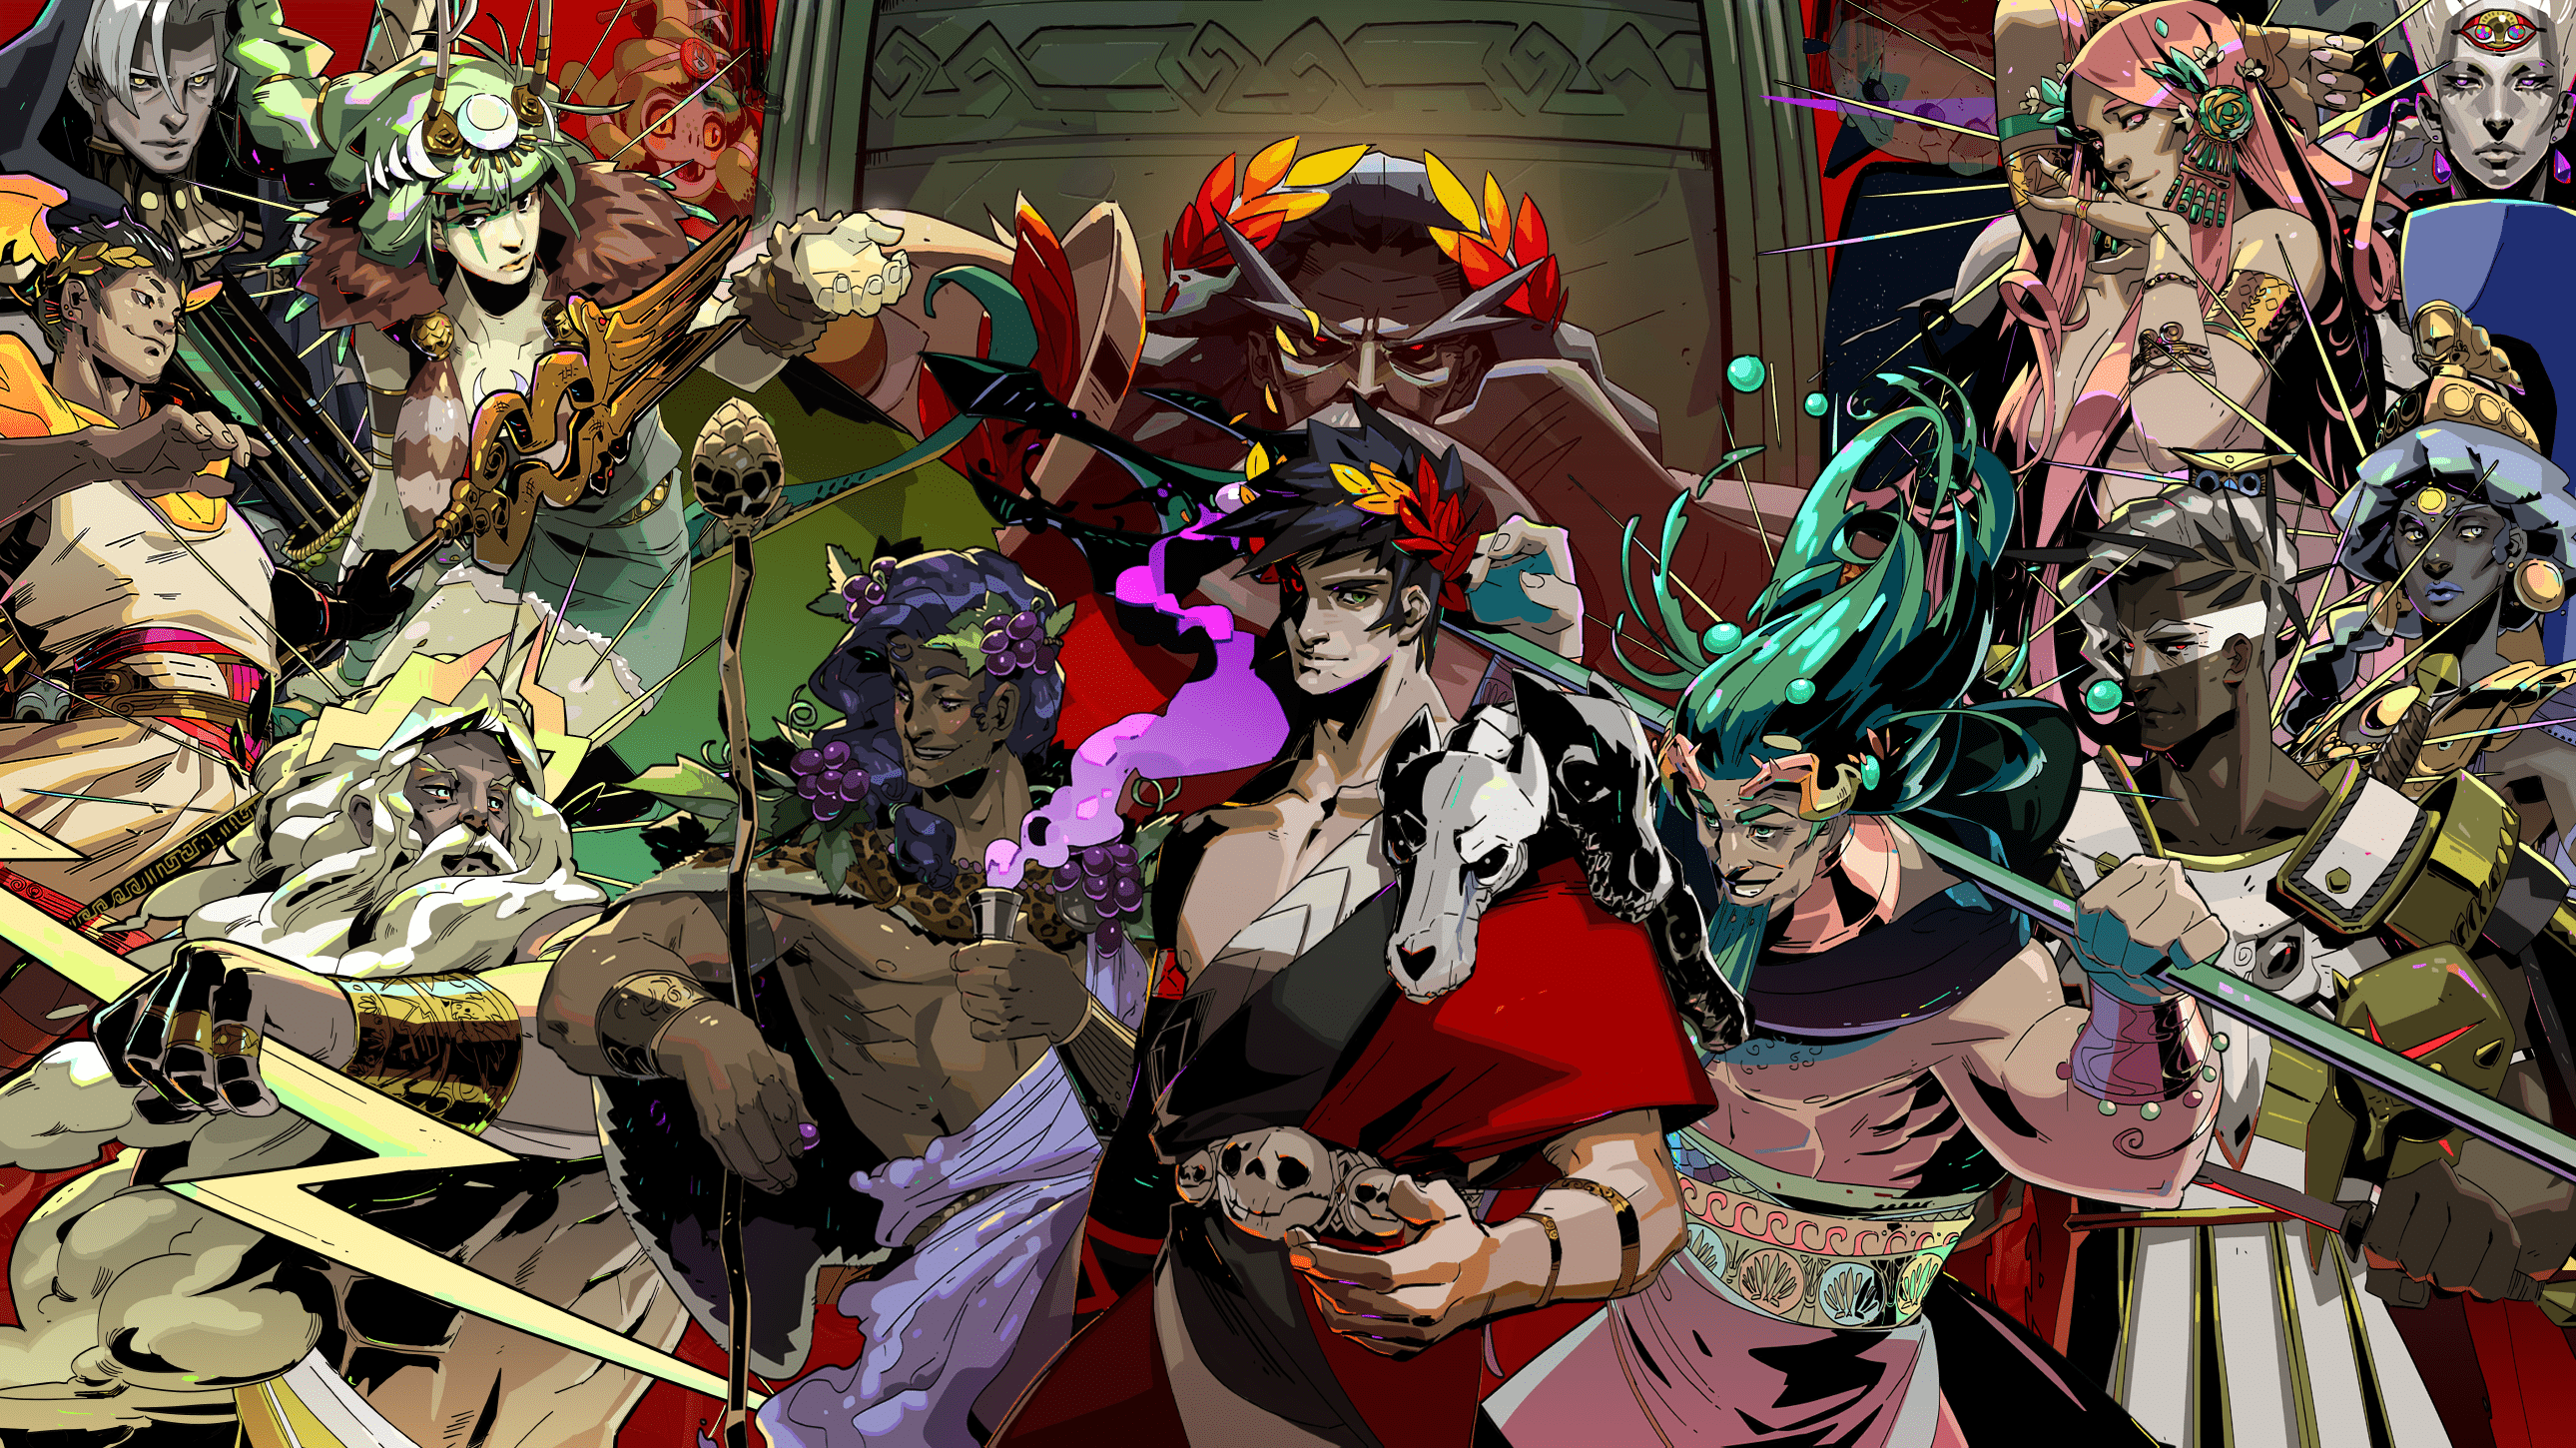 Hades (Game) Supergiant Games #Chaos #1080P #wallpaper #hdwallpaper  #desktop